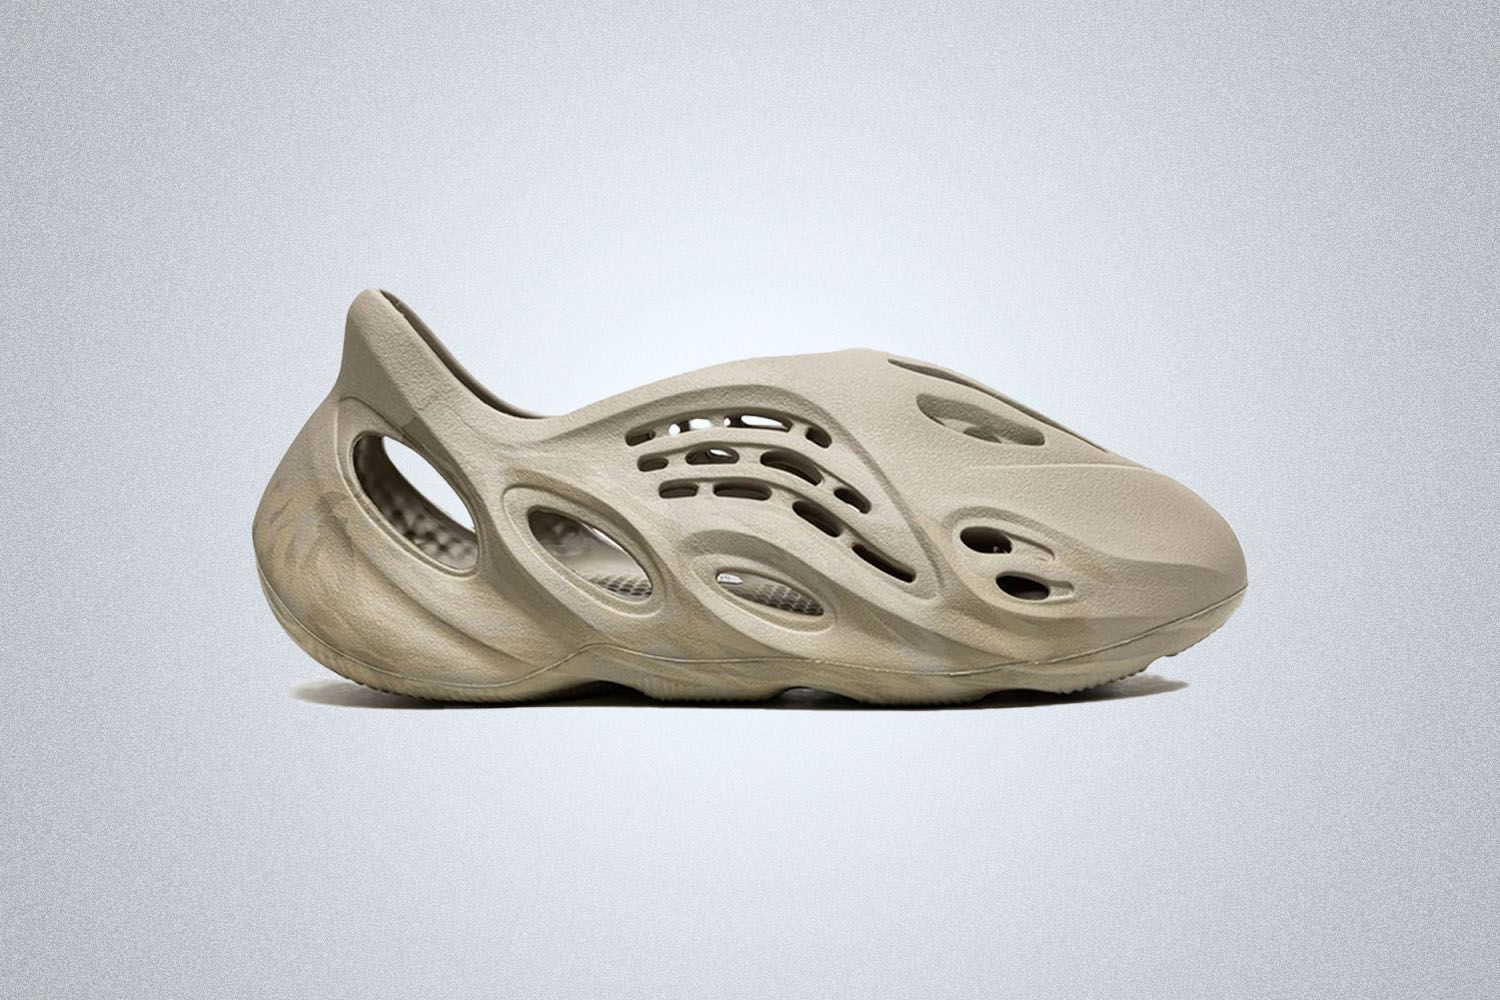 A pair of beige Yeezy Foam Runner Sneakers on a grey background